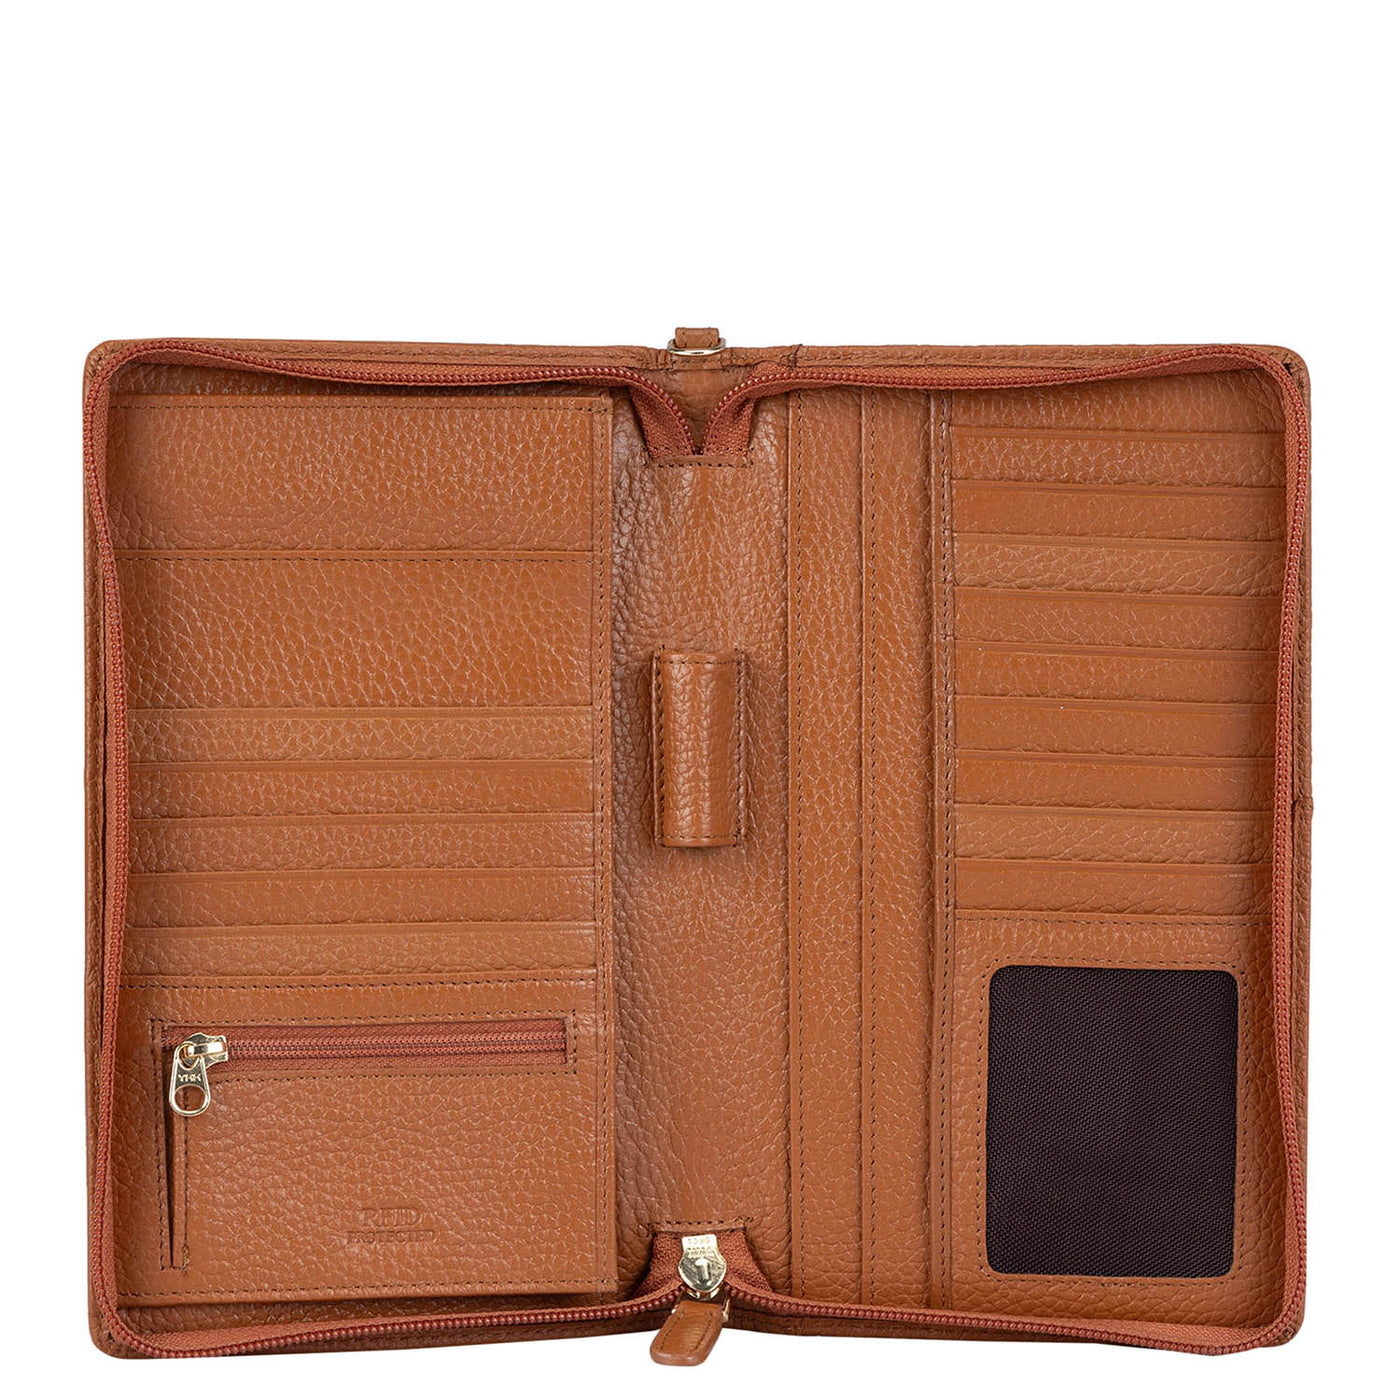 Wax Leather Passport Case - Caramel